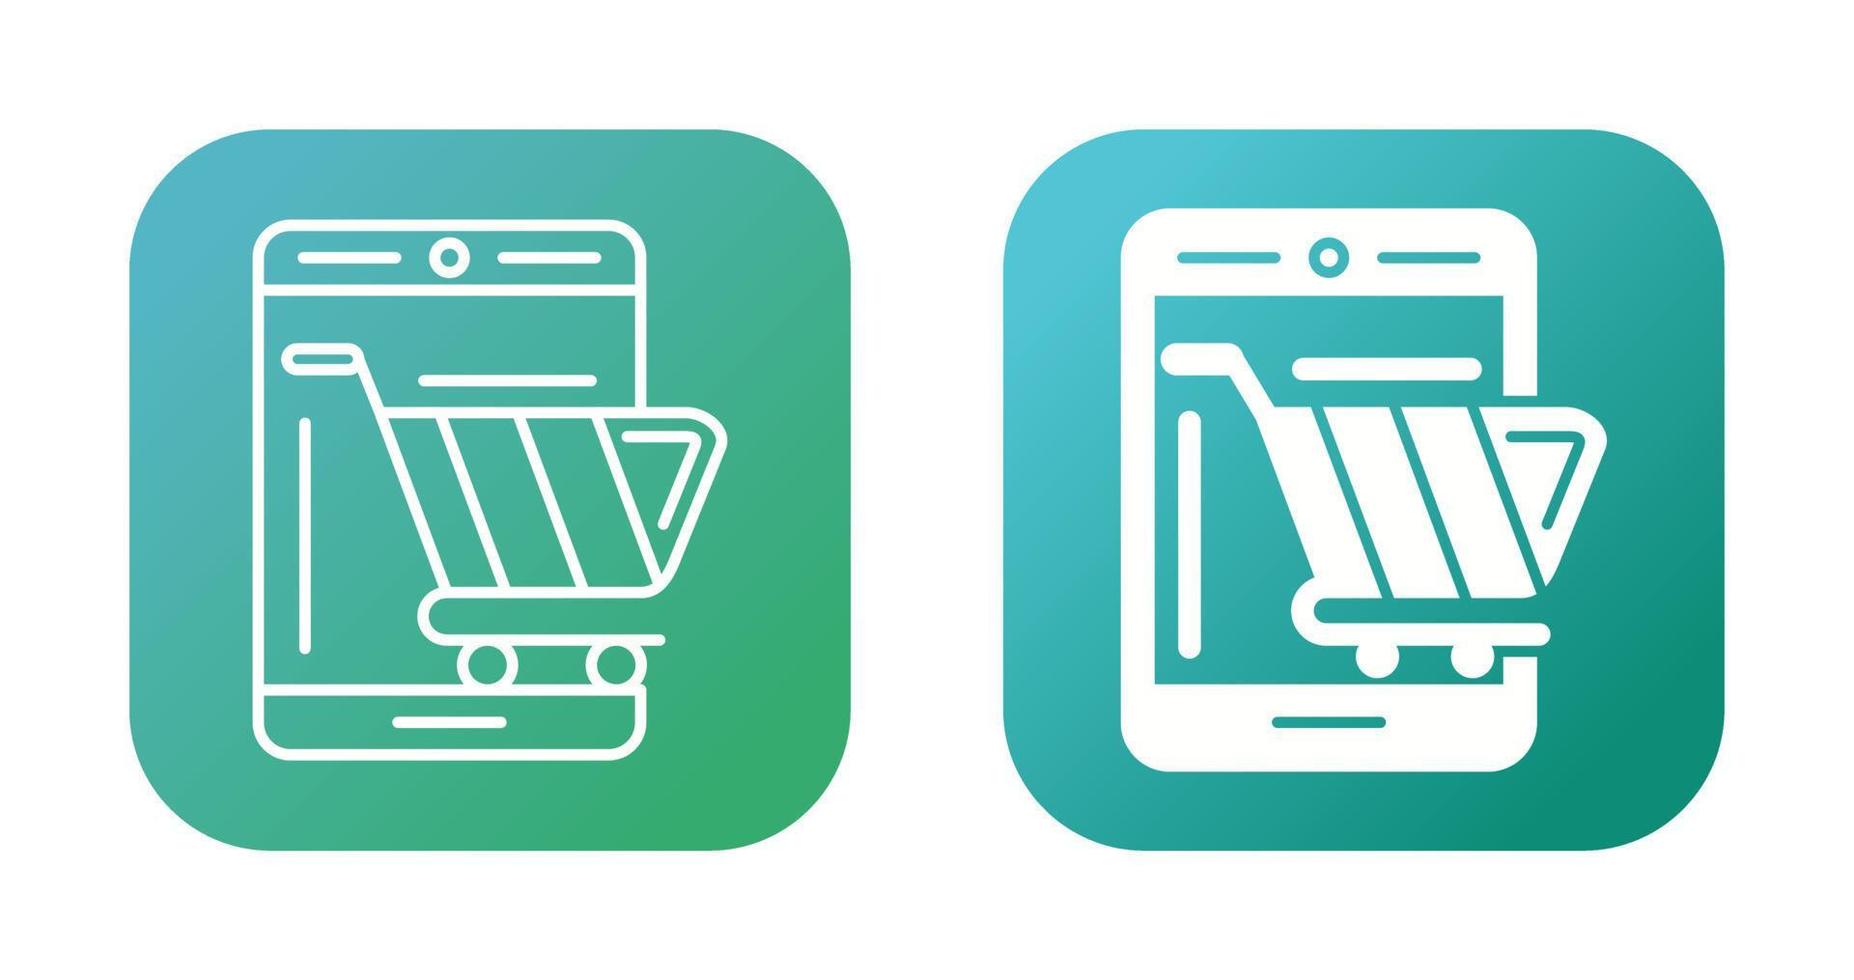 Online Shopping Vector Icon